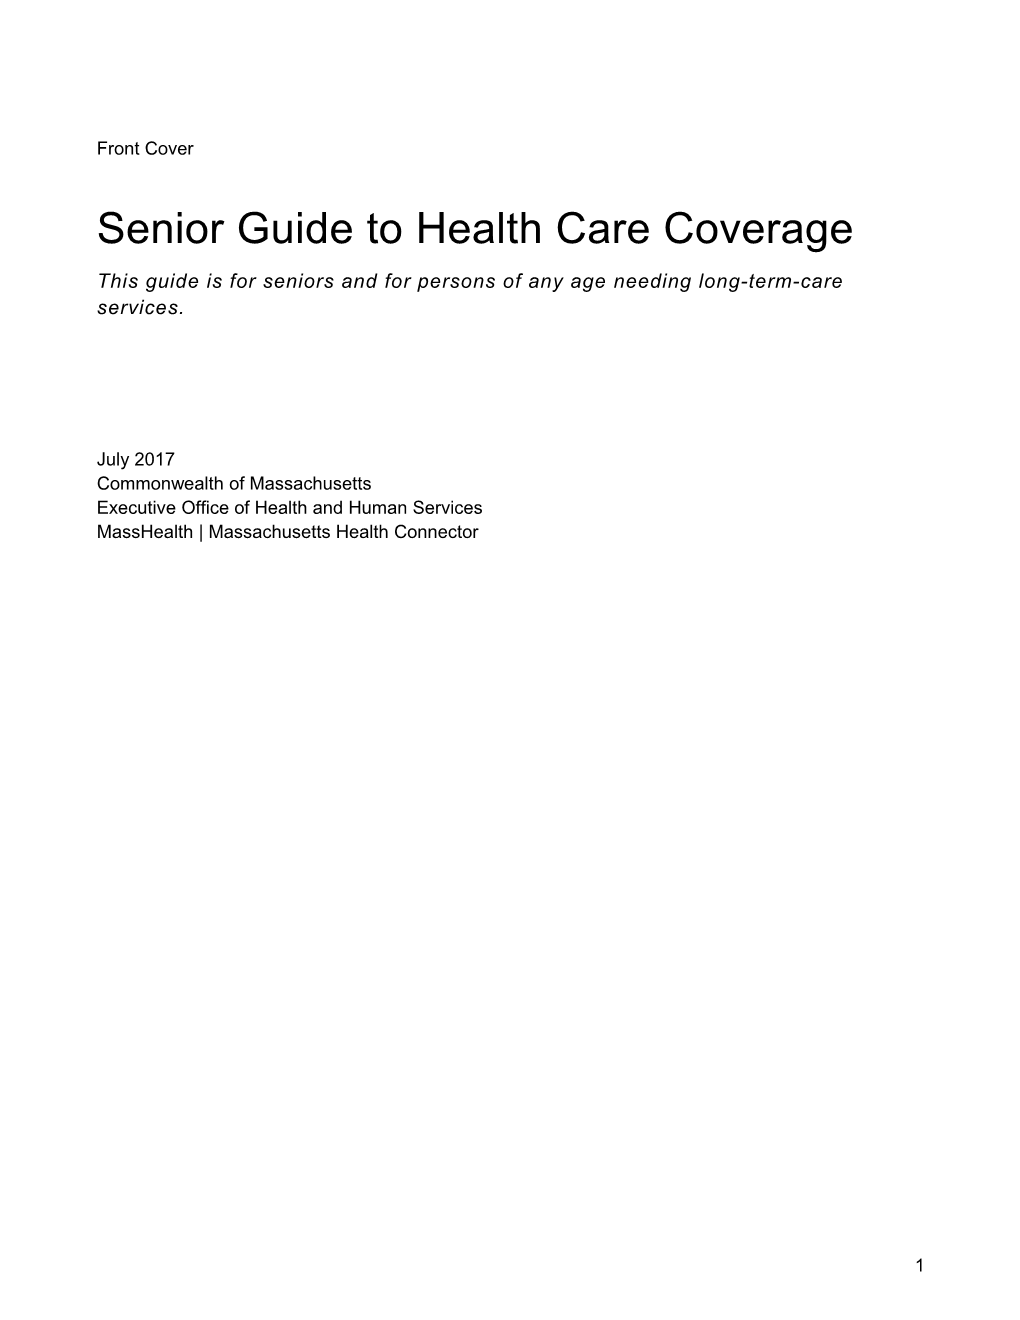 Senior Guide to Health Care Coverage